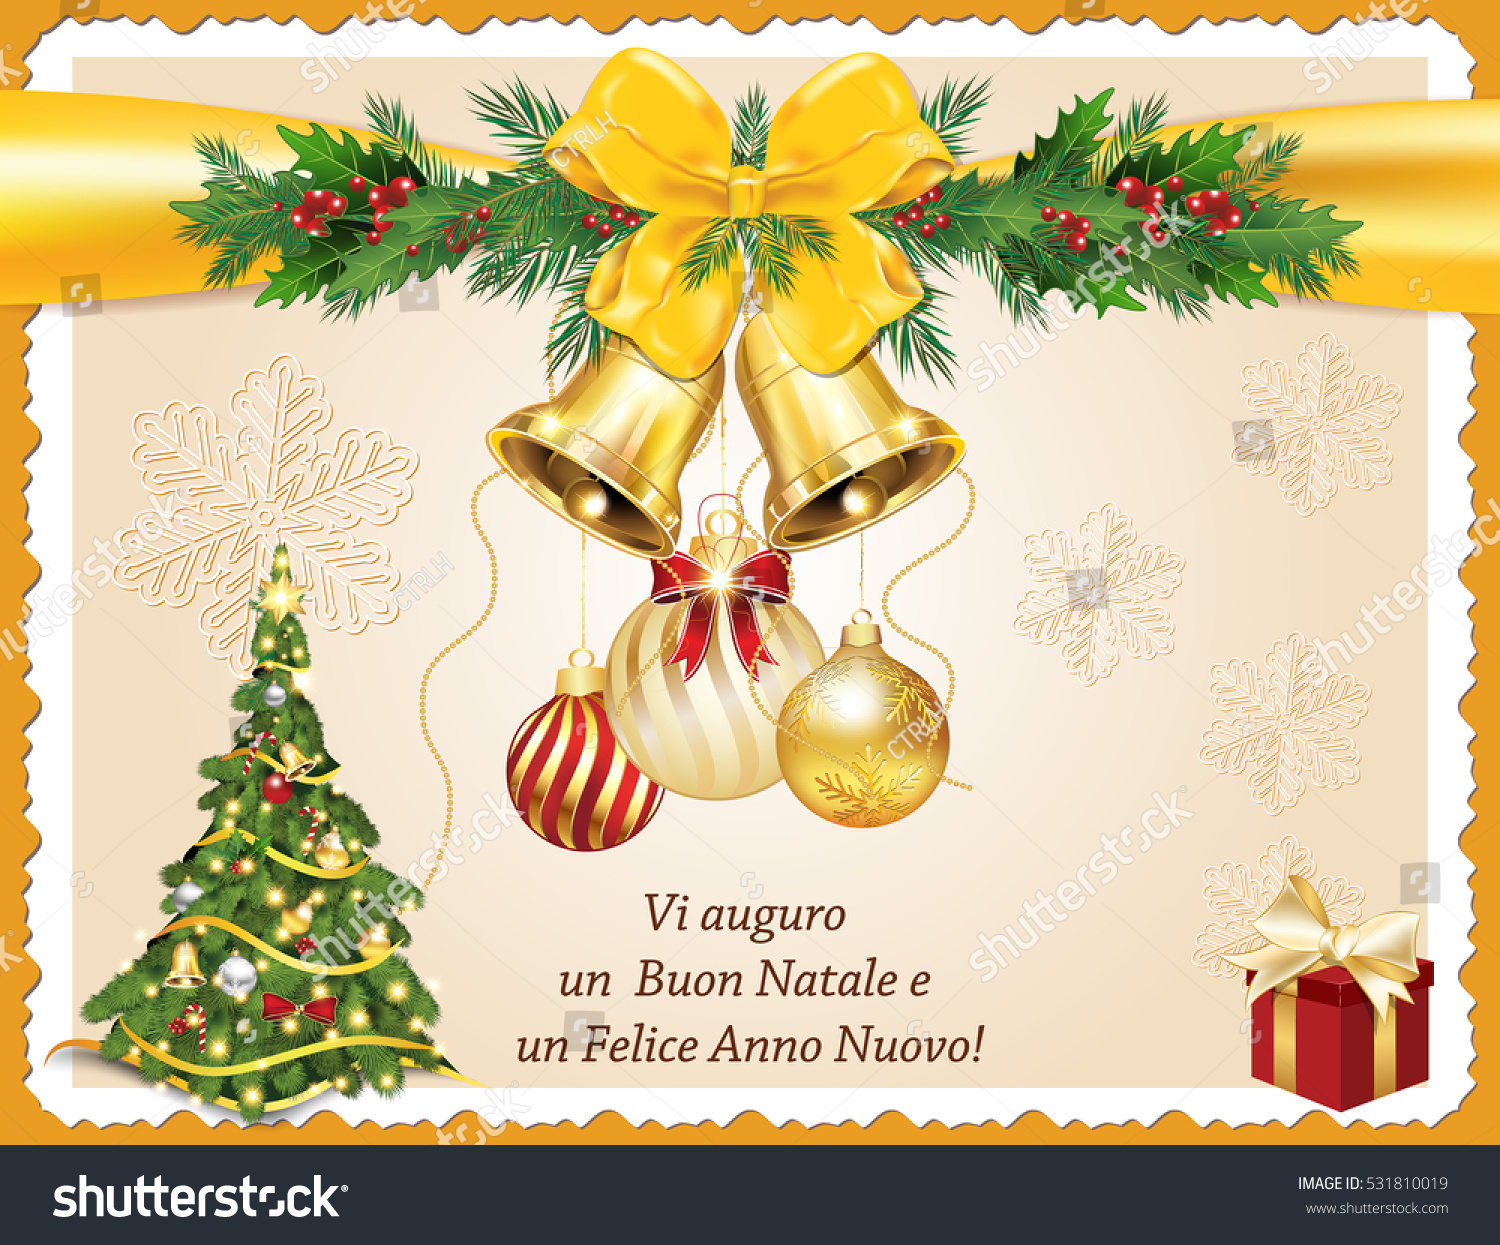 Vi Auguro Un Buon Natale.Vi Auguro Un Buon Natale E Stock Illustration 531810019